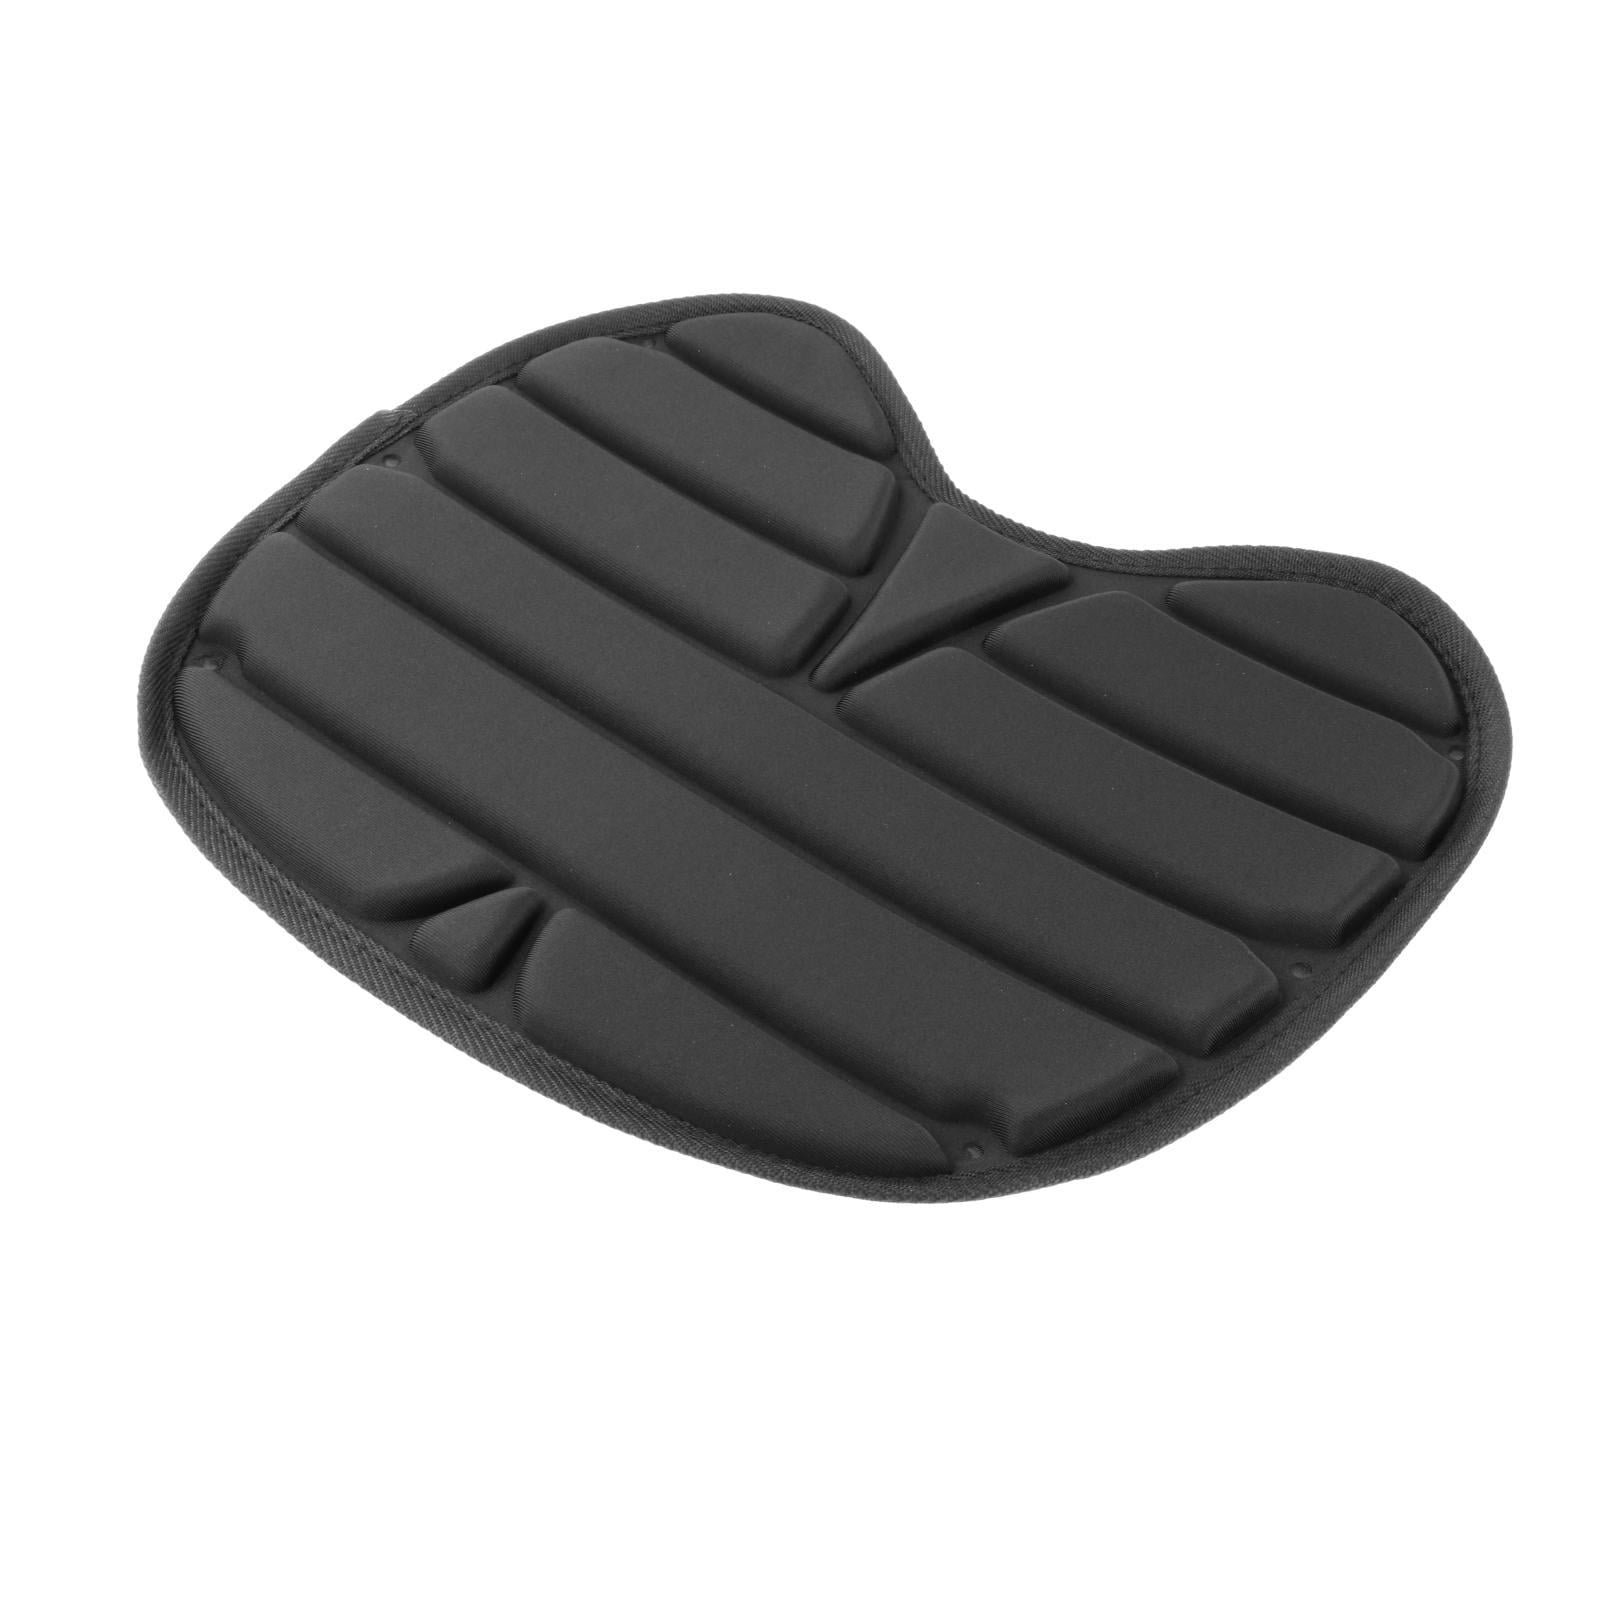 Padded Kayak Seat Cushion Pad Comfortable Soft On Top for Kayak Canoe Fishing Boat Black 